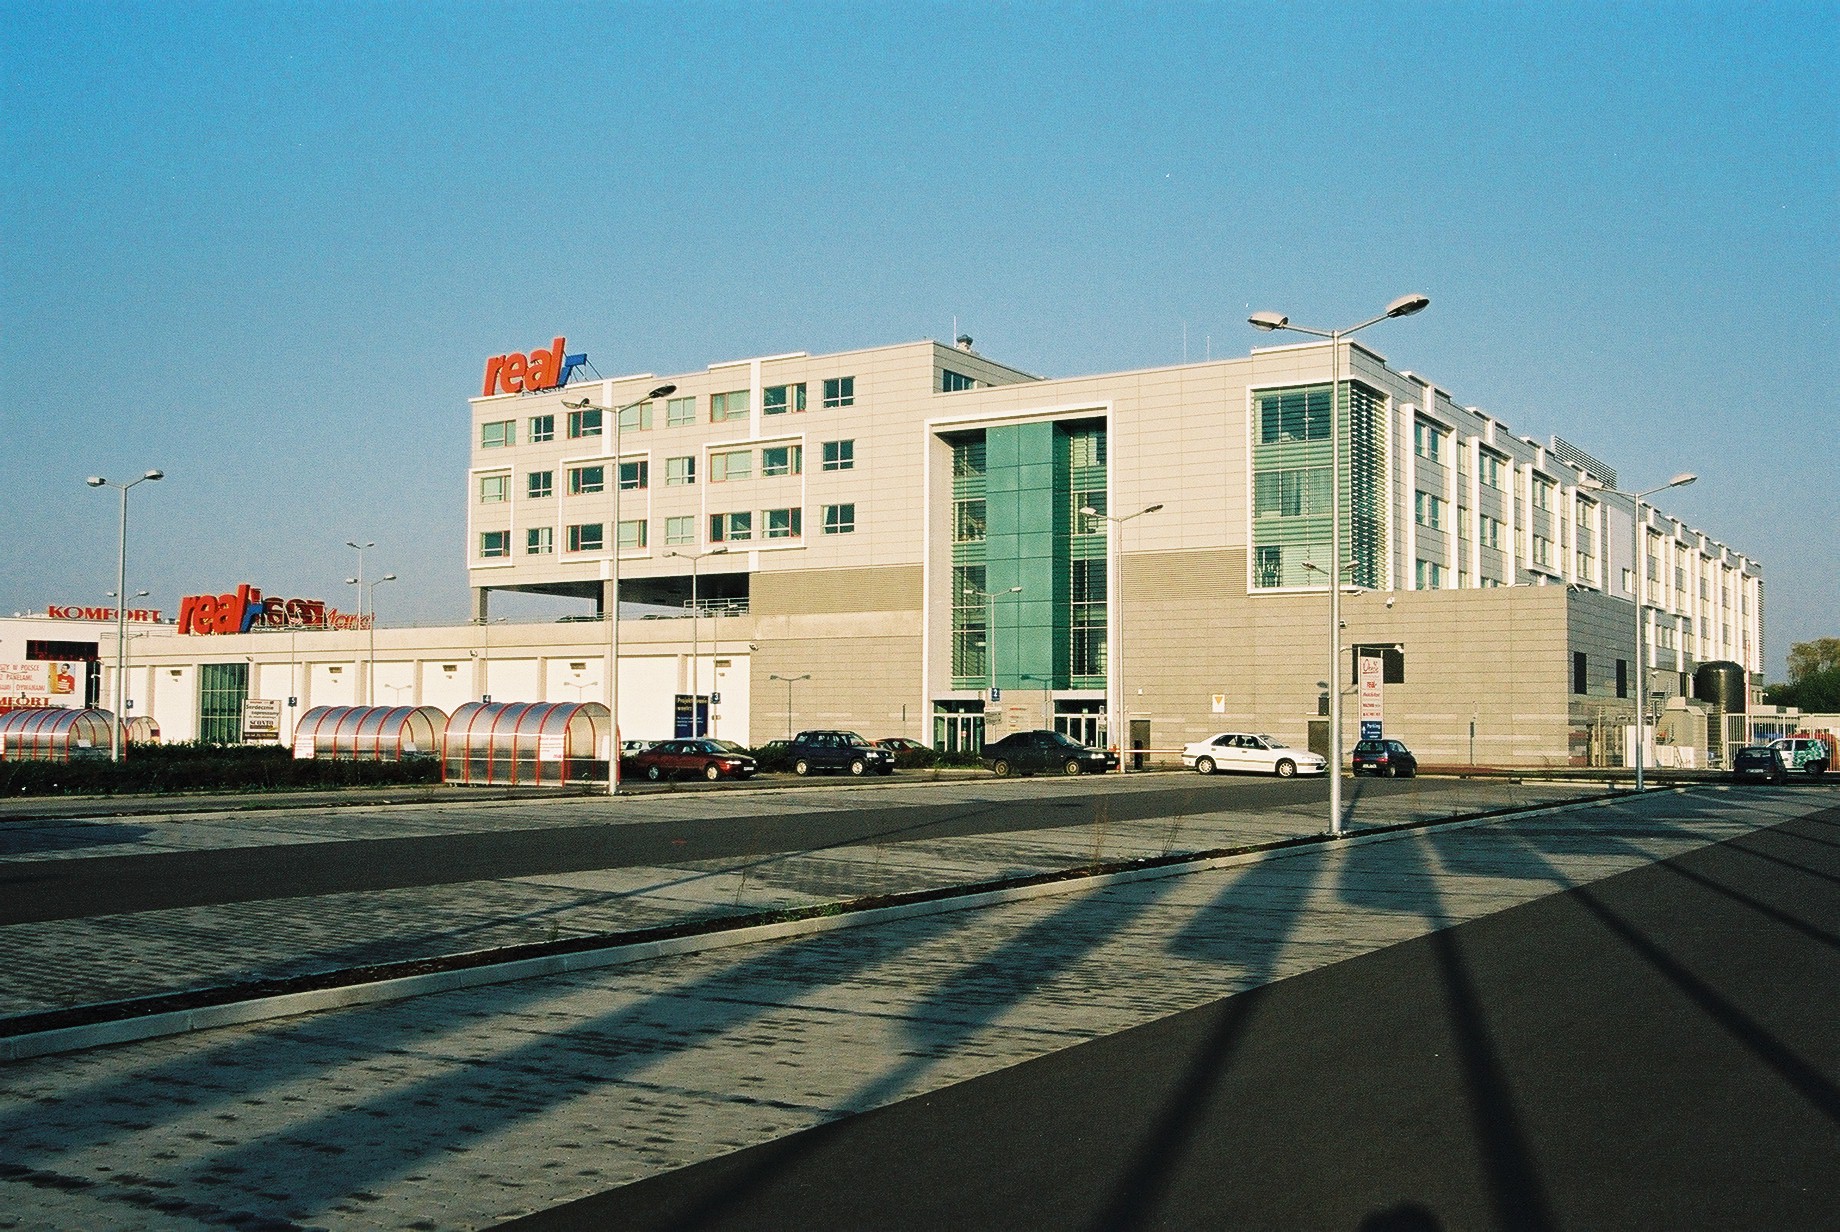 Hipermarket Real i Biurowiec Metro AG w Warszawie - Building construction